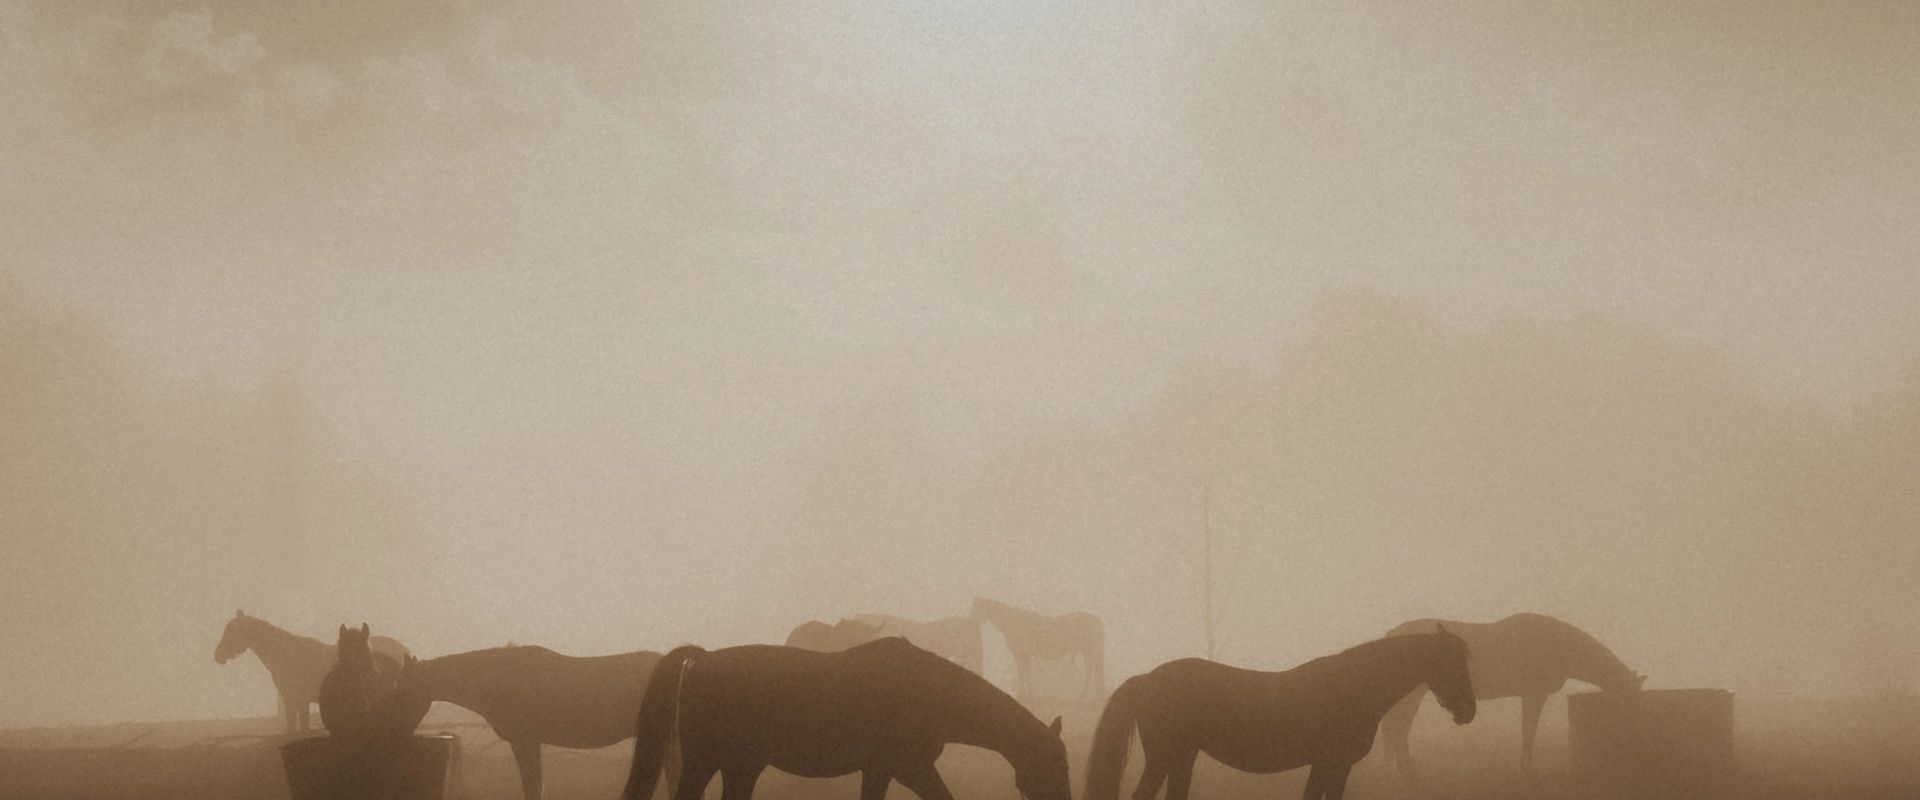 Horse silhouettes in a smoky haze